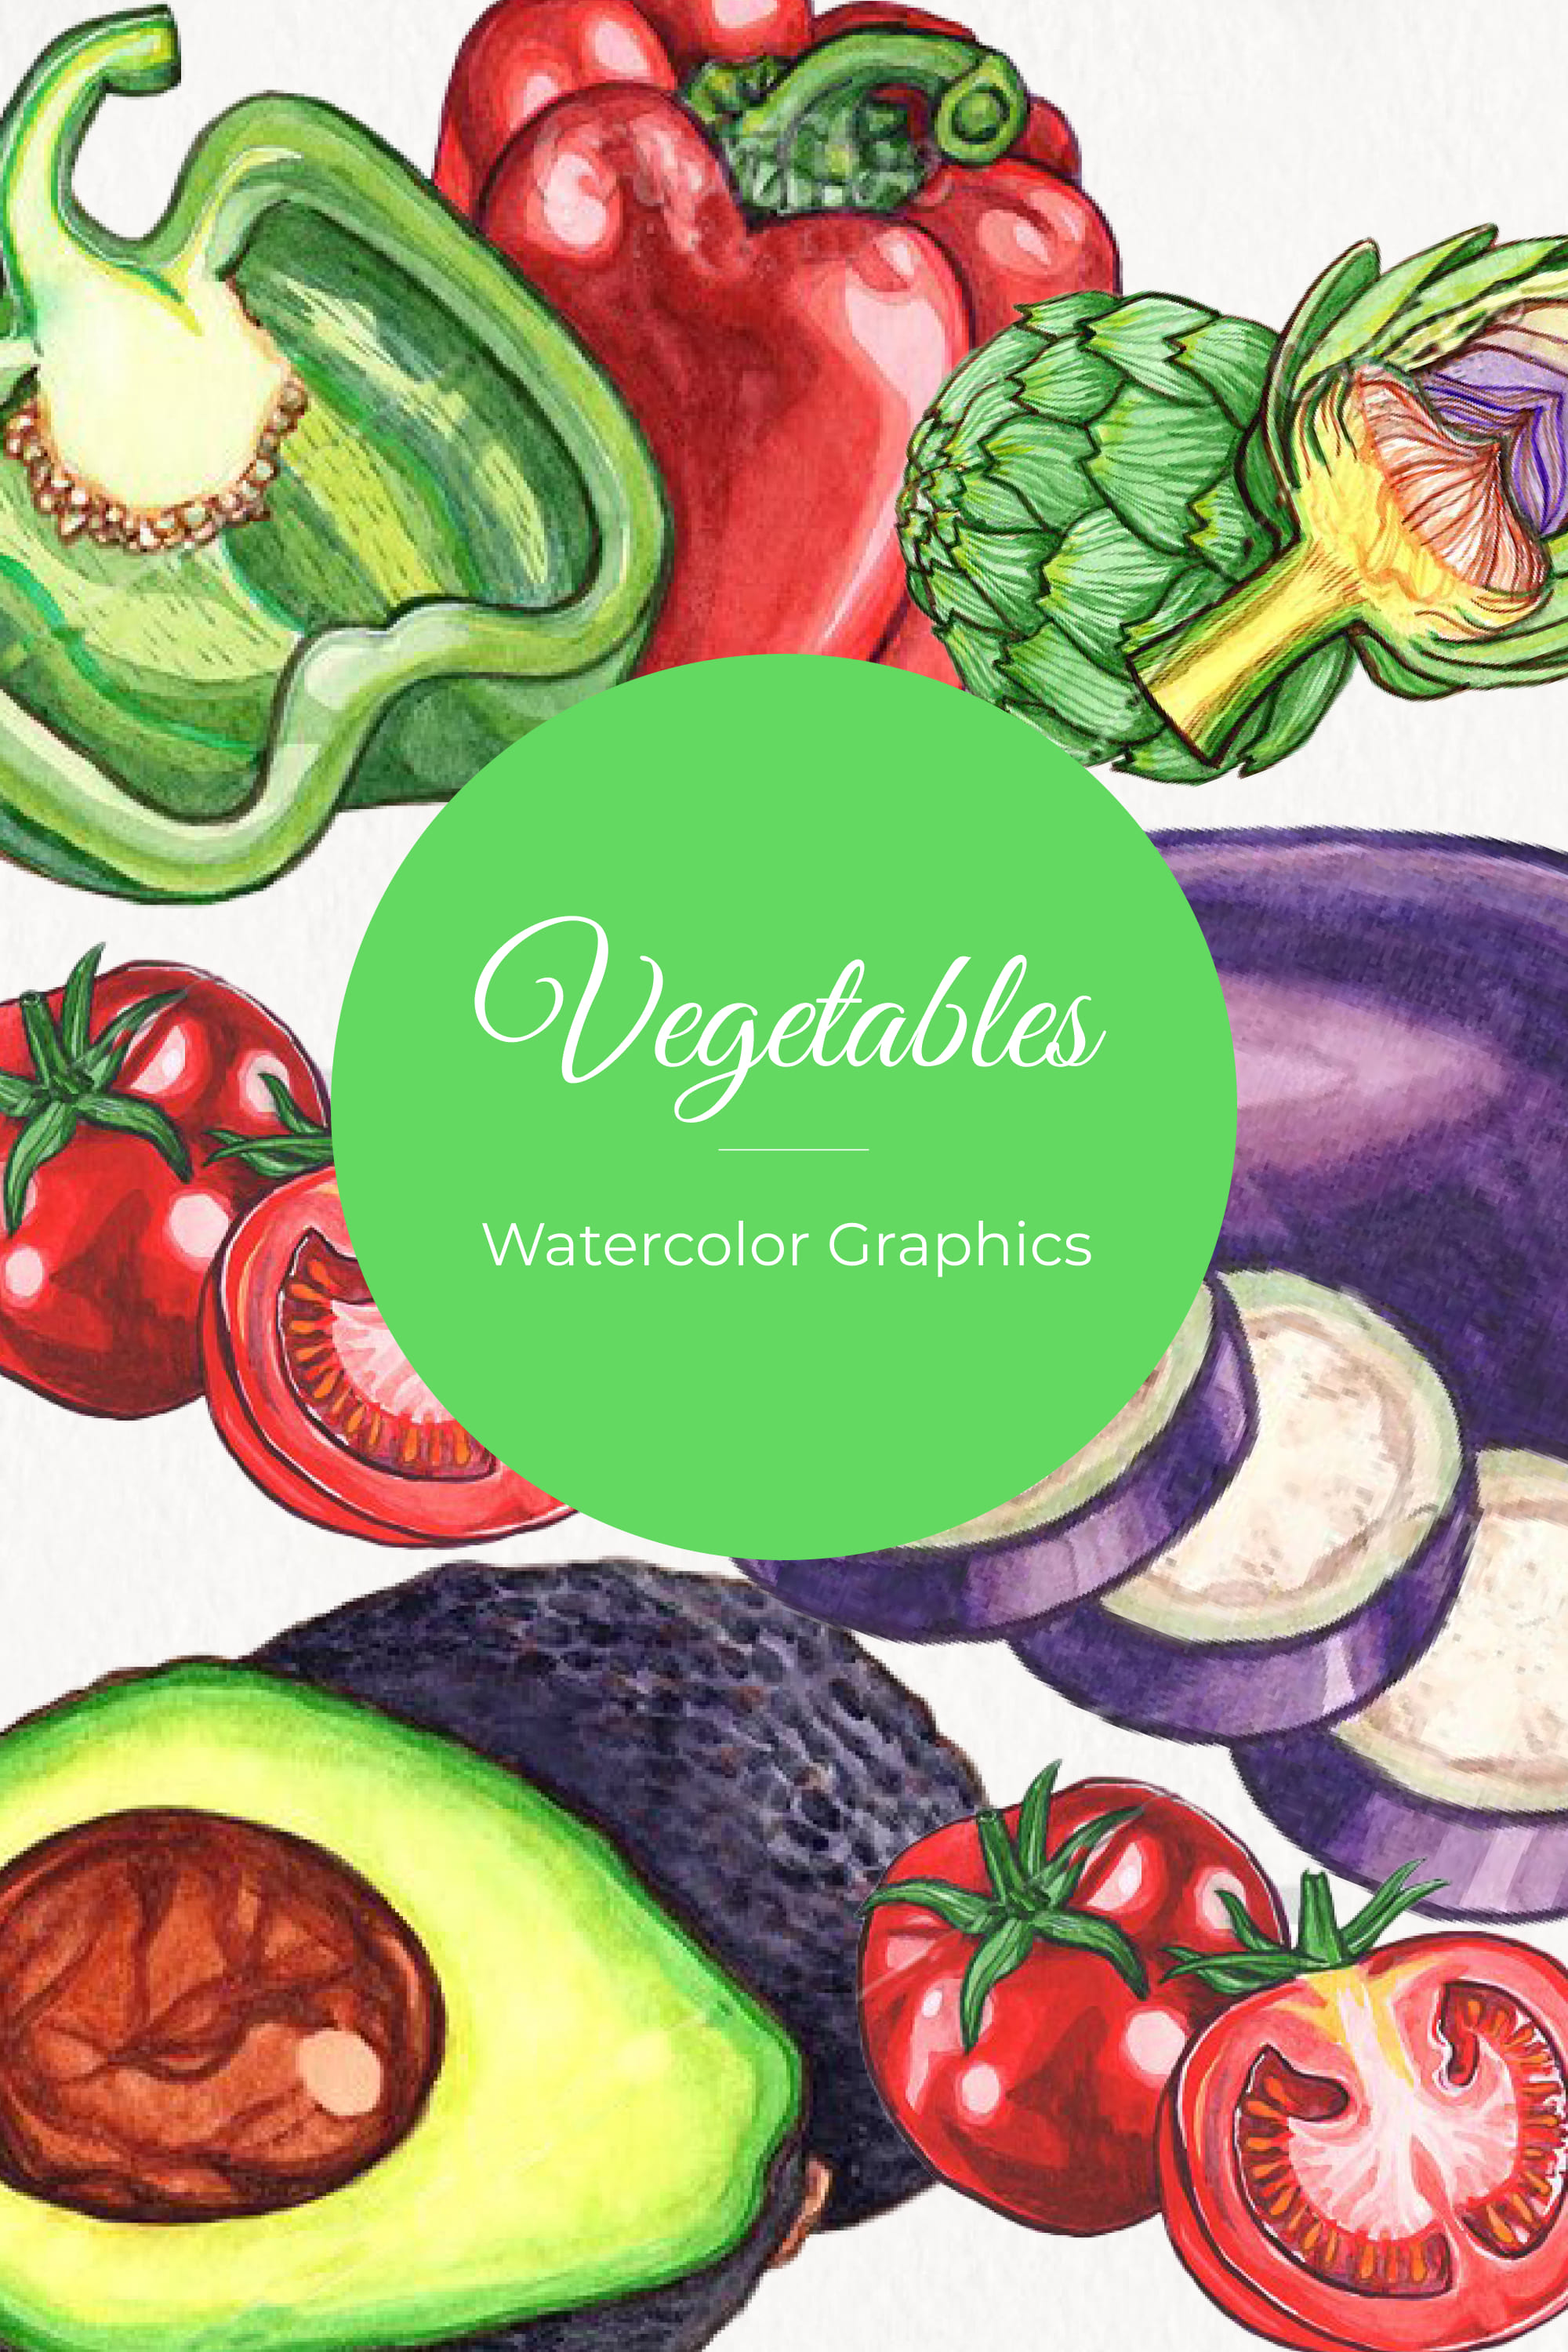 watercolor vegetables pinterest